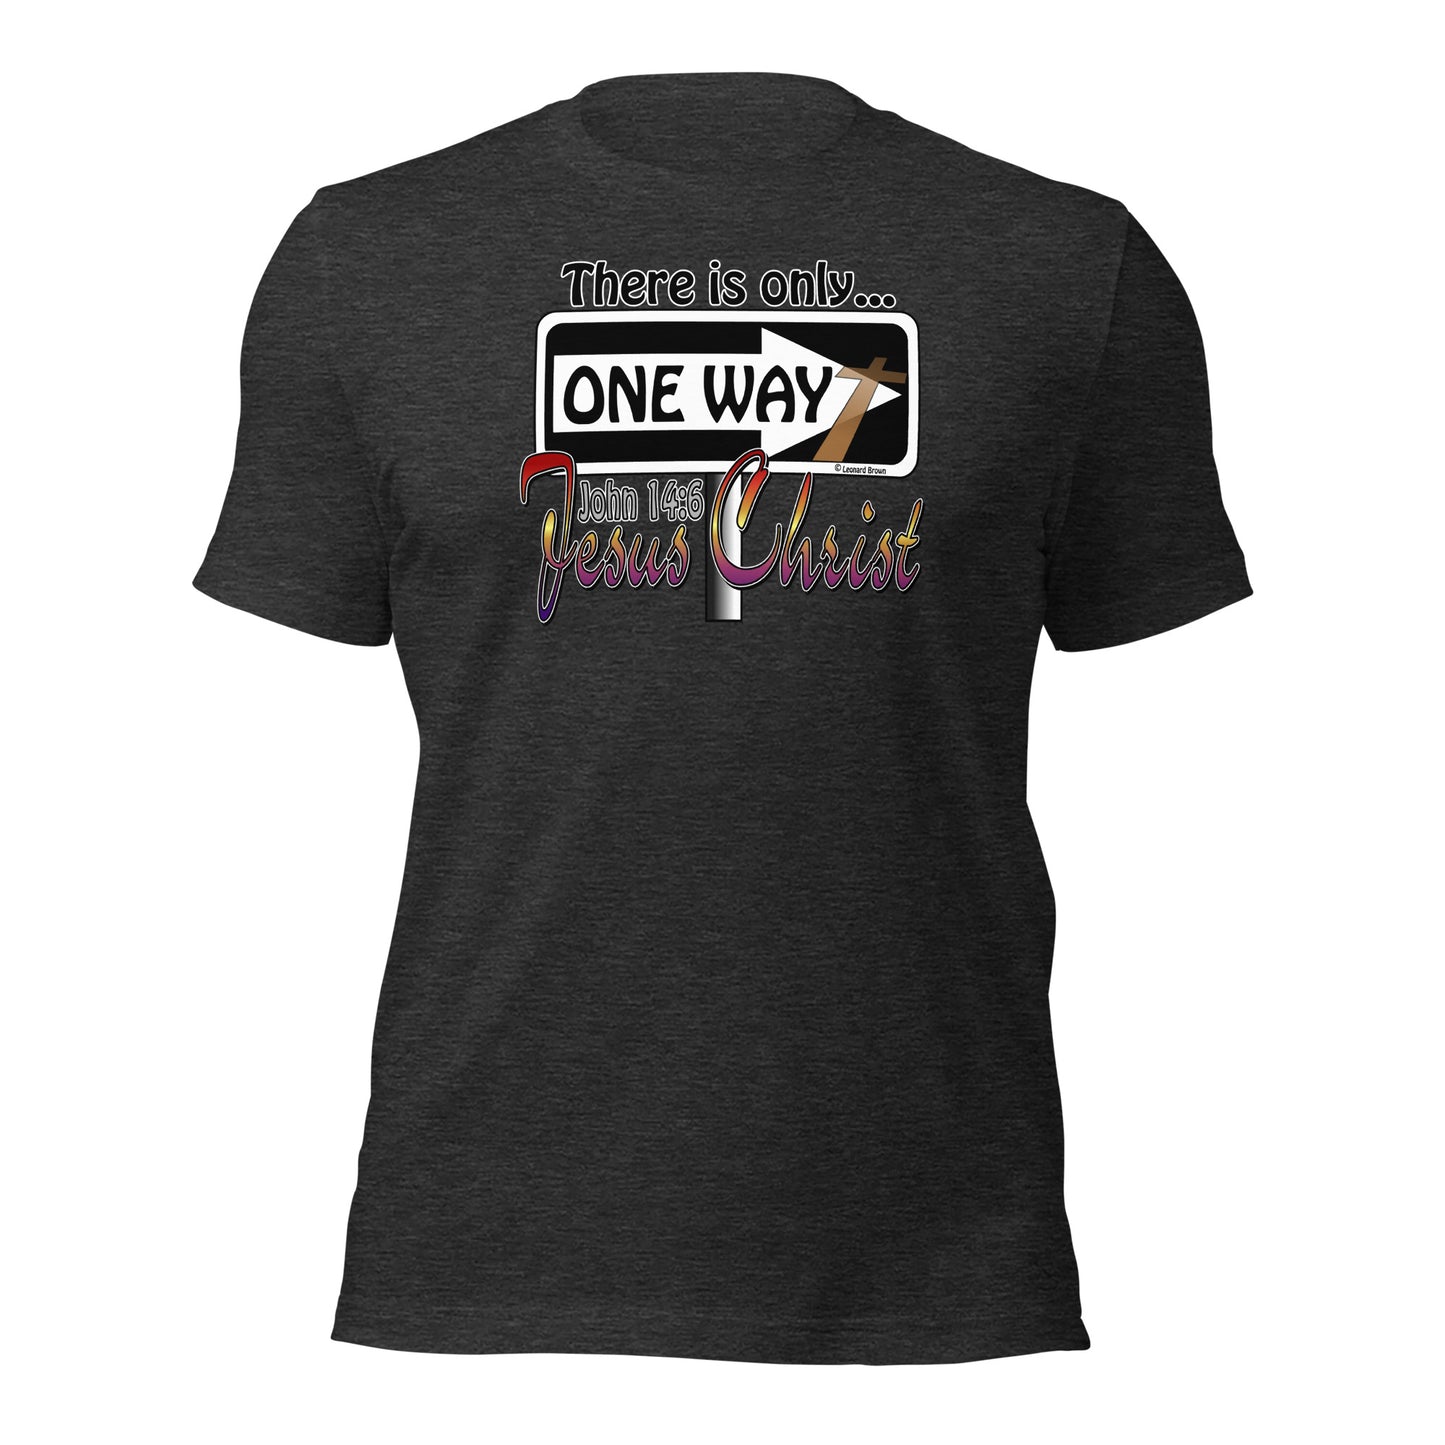 One Way t-shirt